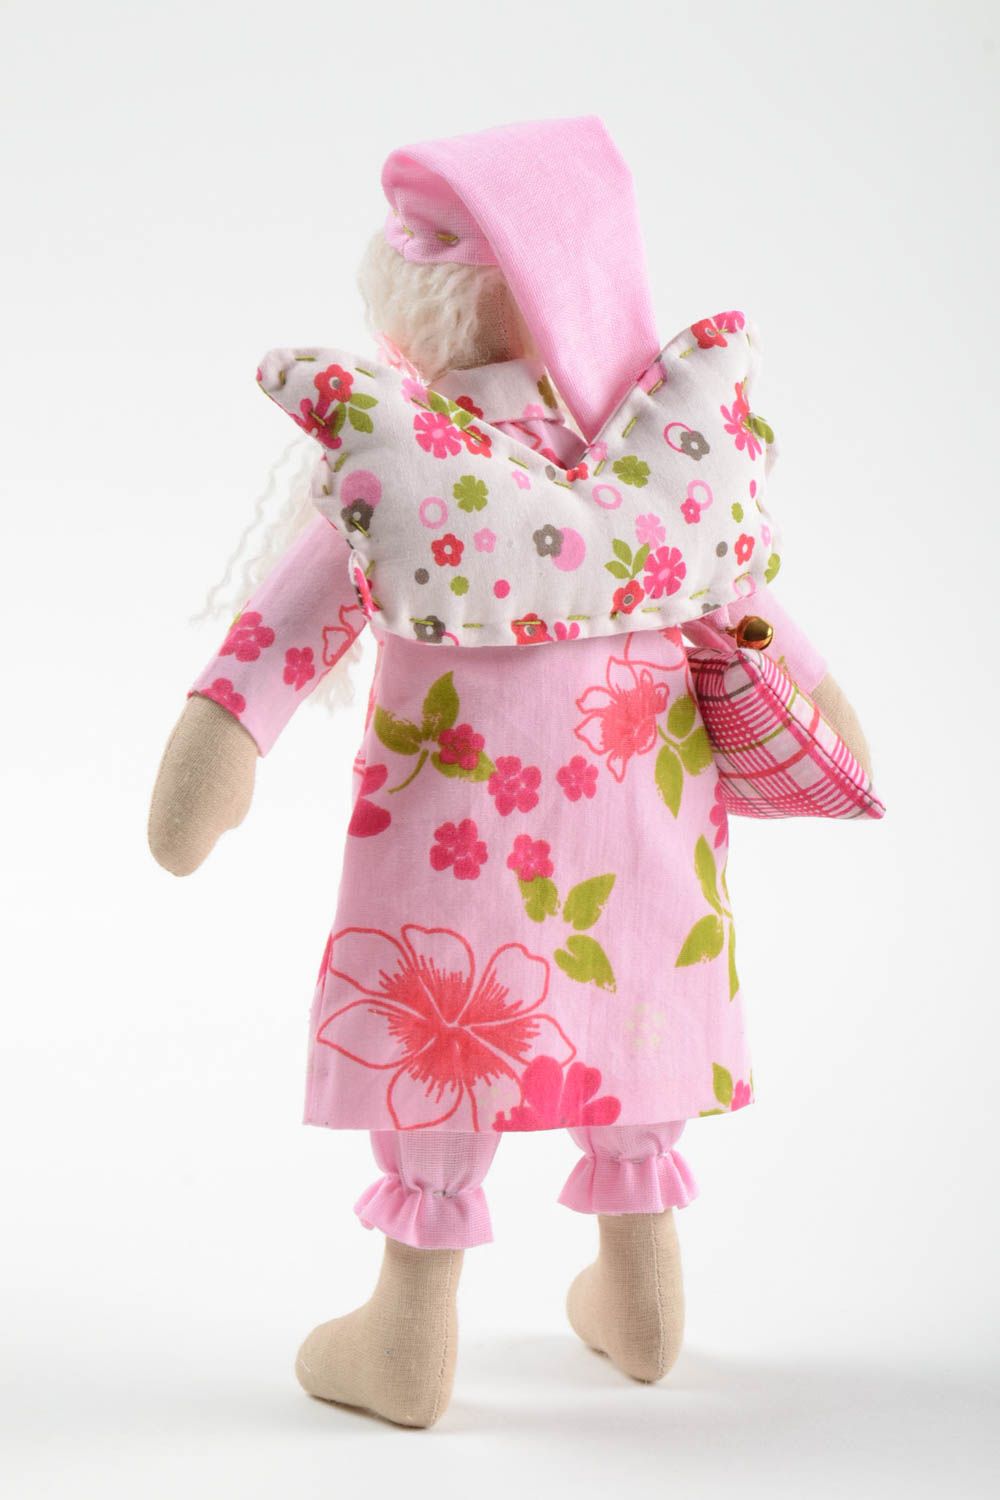 Beautiful handmade interior doll fabric soft toy rag doll designs gift ideas photo 4